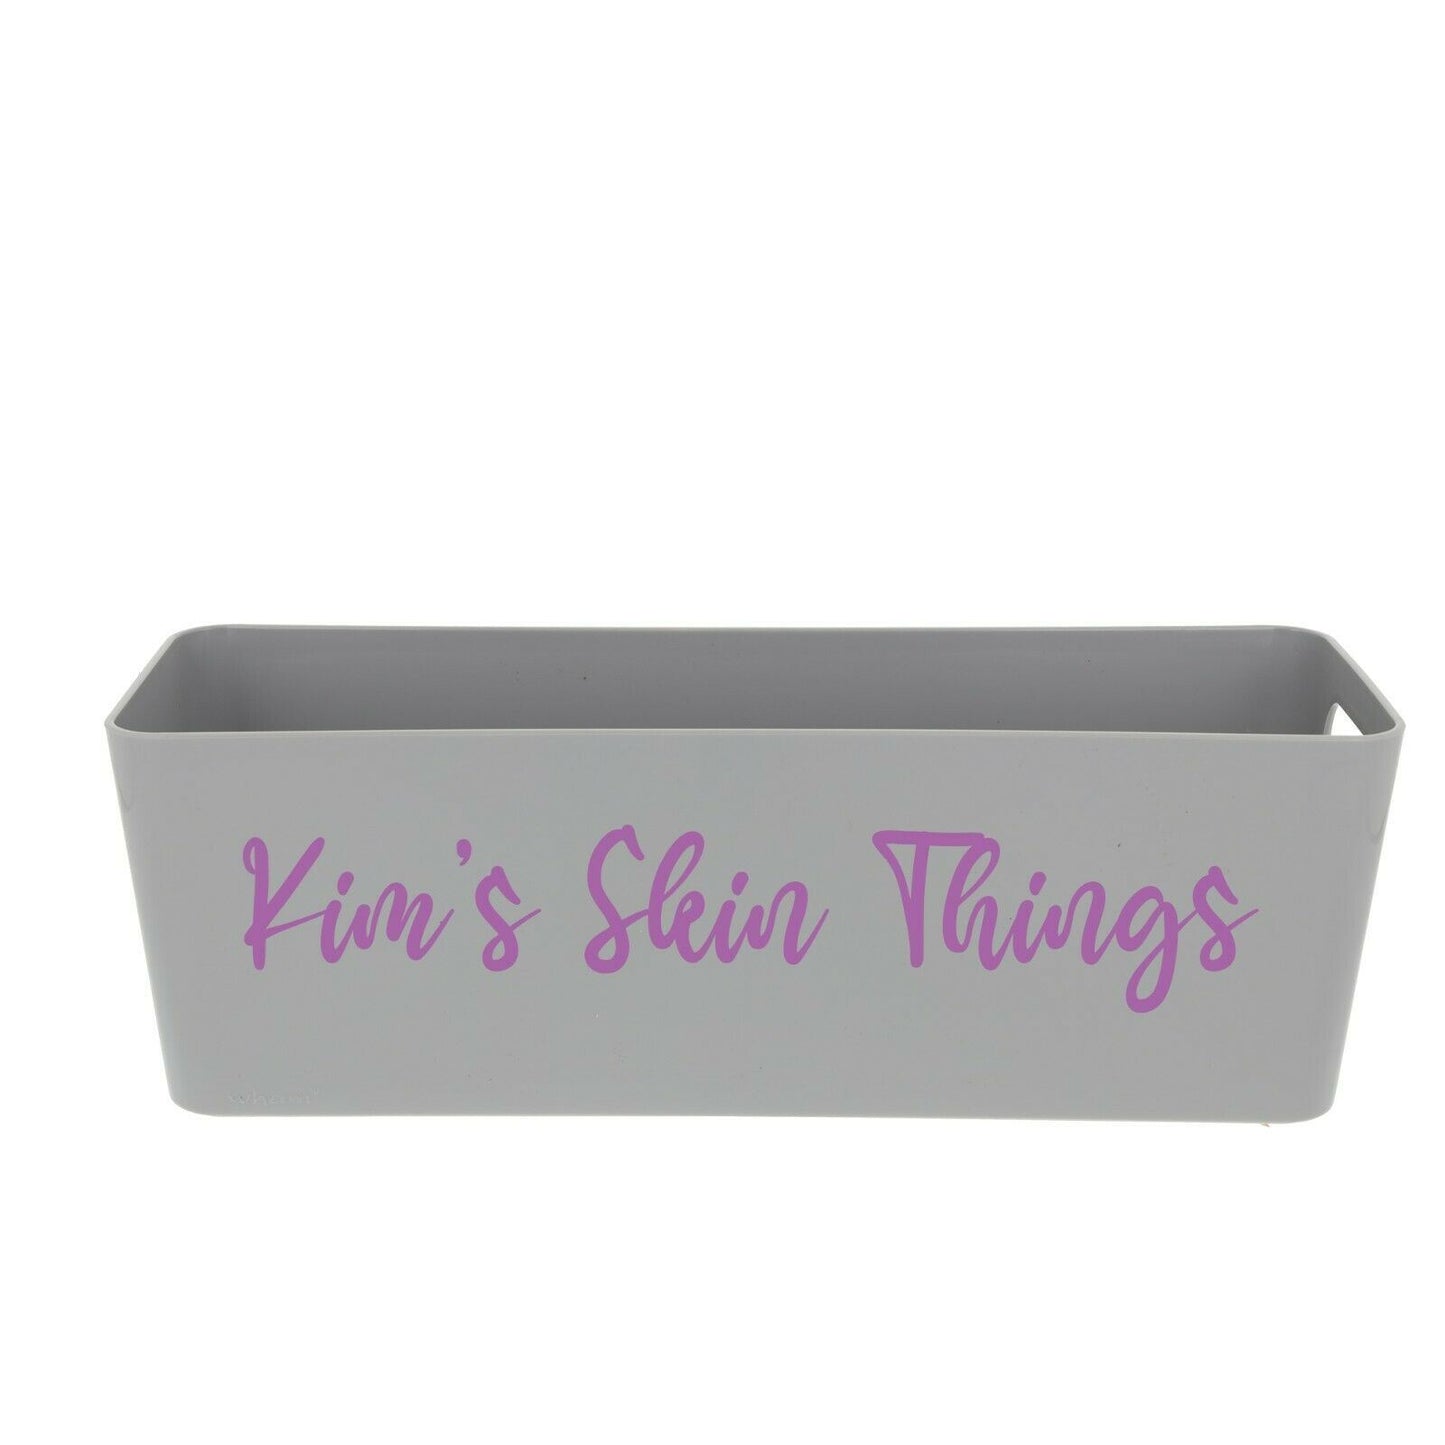 Simple Skincare Filled Personalised Storage Gift Box  - Always Looking Good -   